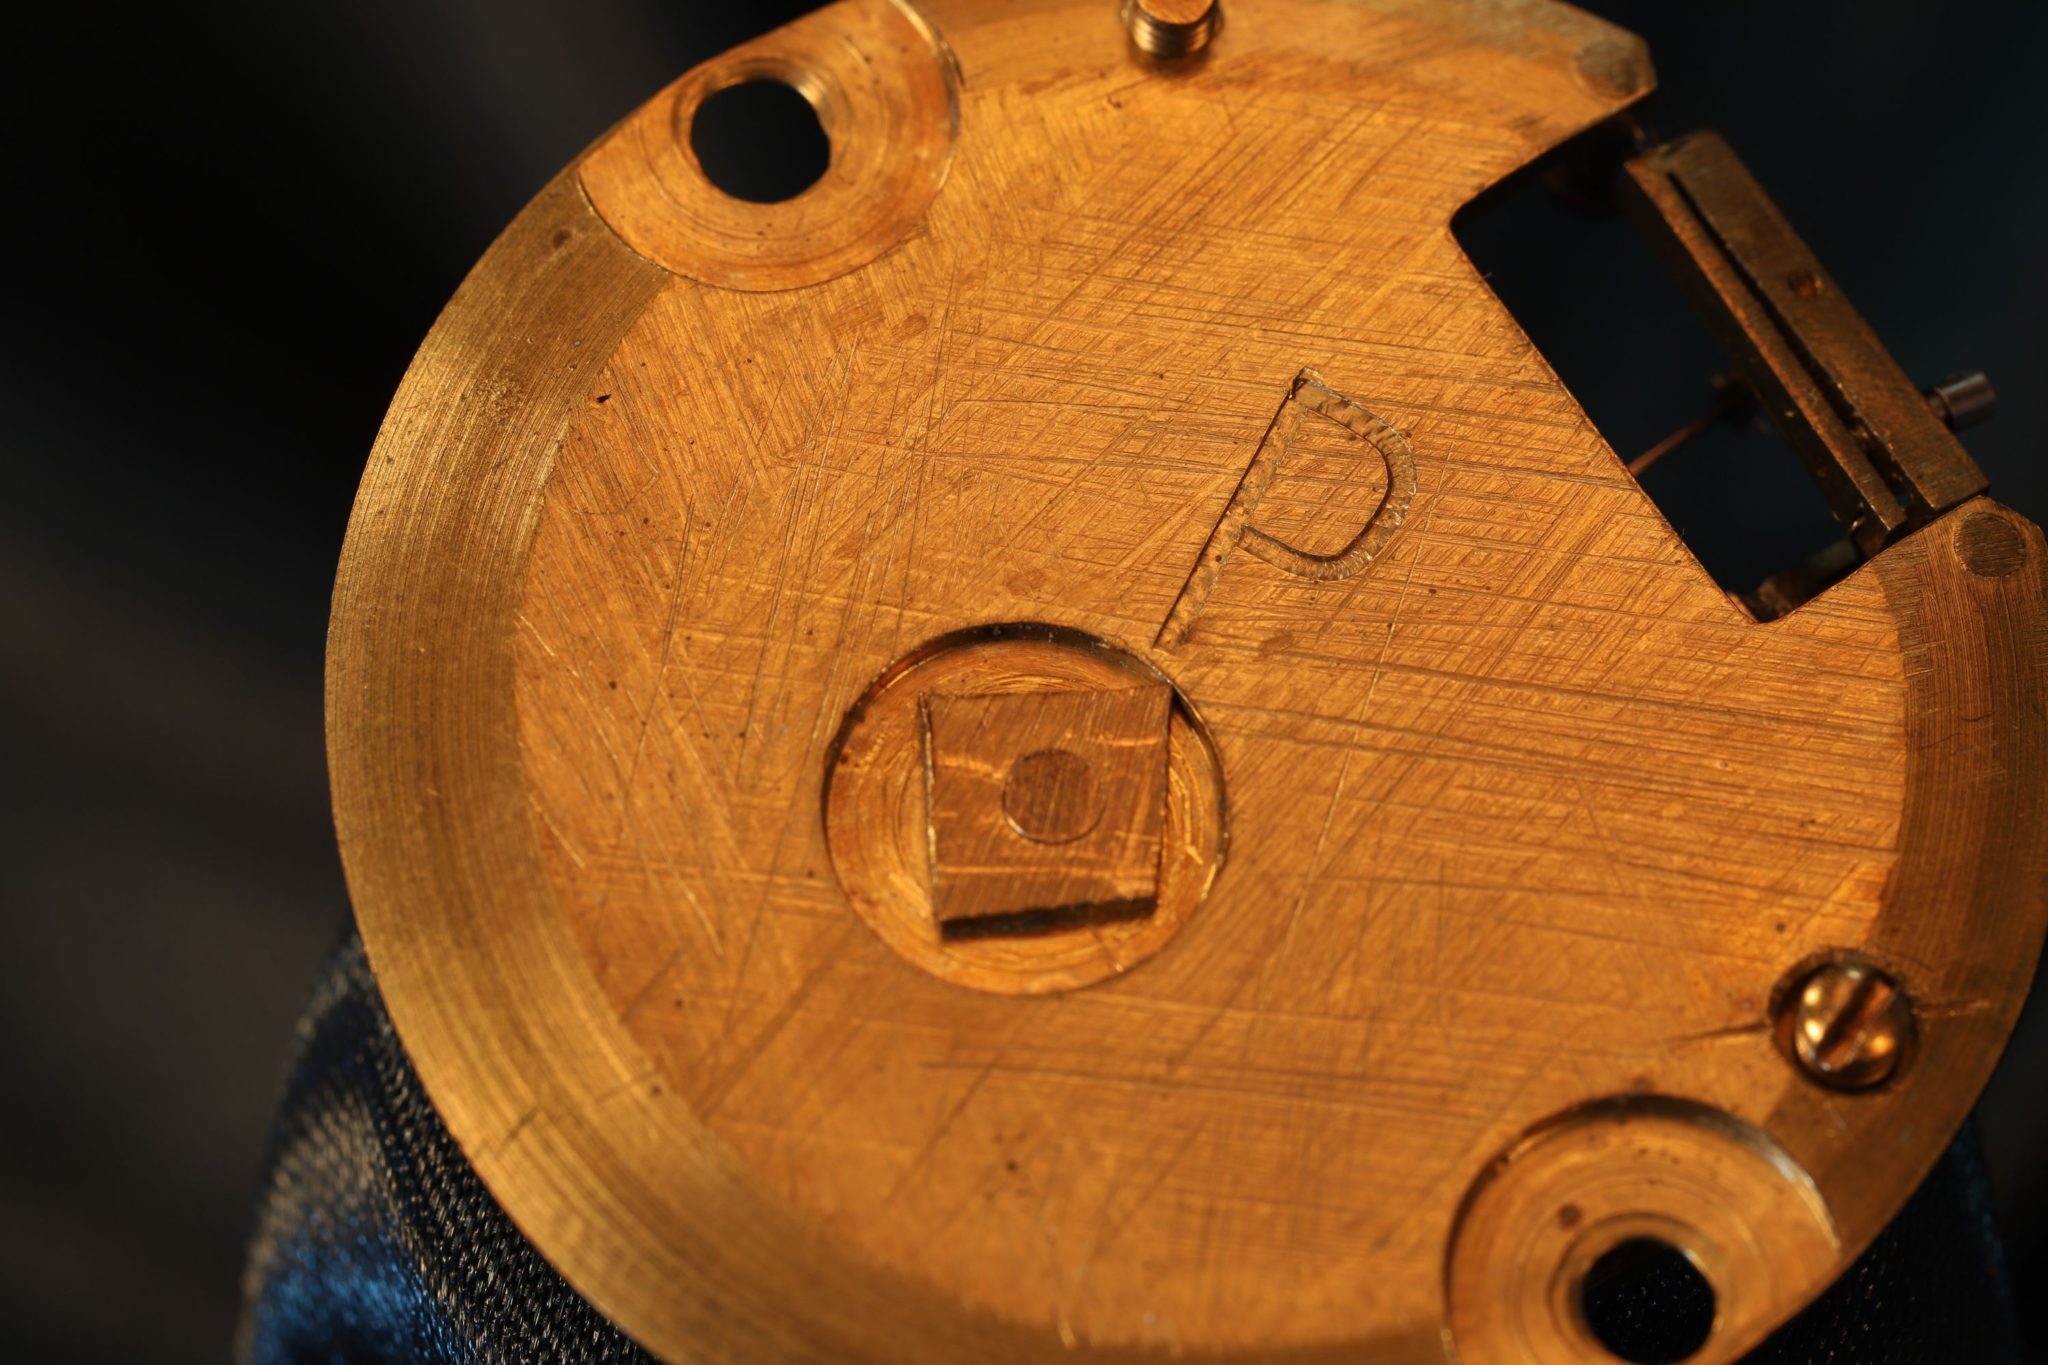 Image of Lancaster Pocket Barometer Compass Thermometer Compendium c1880